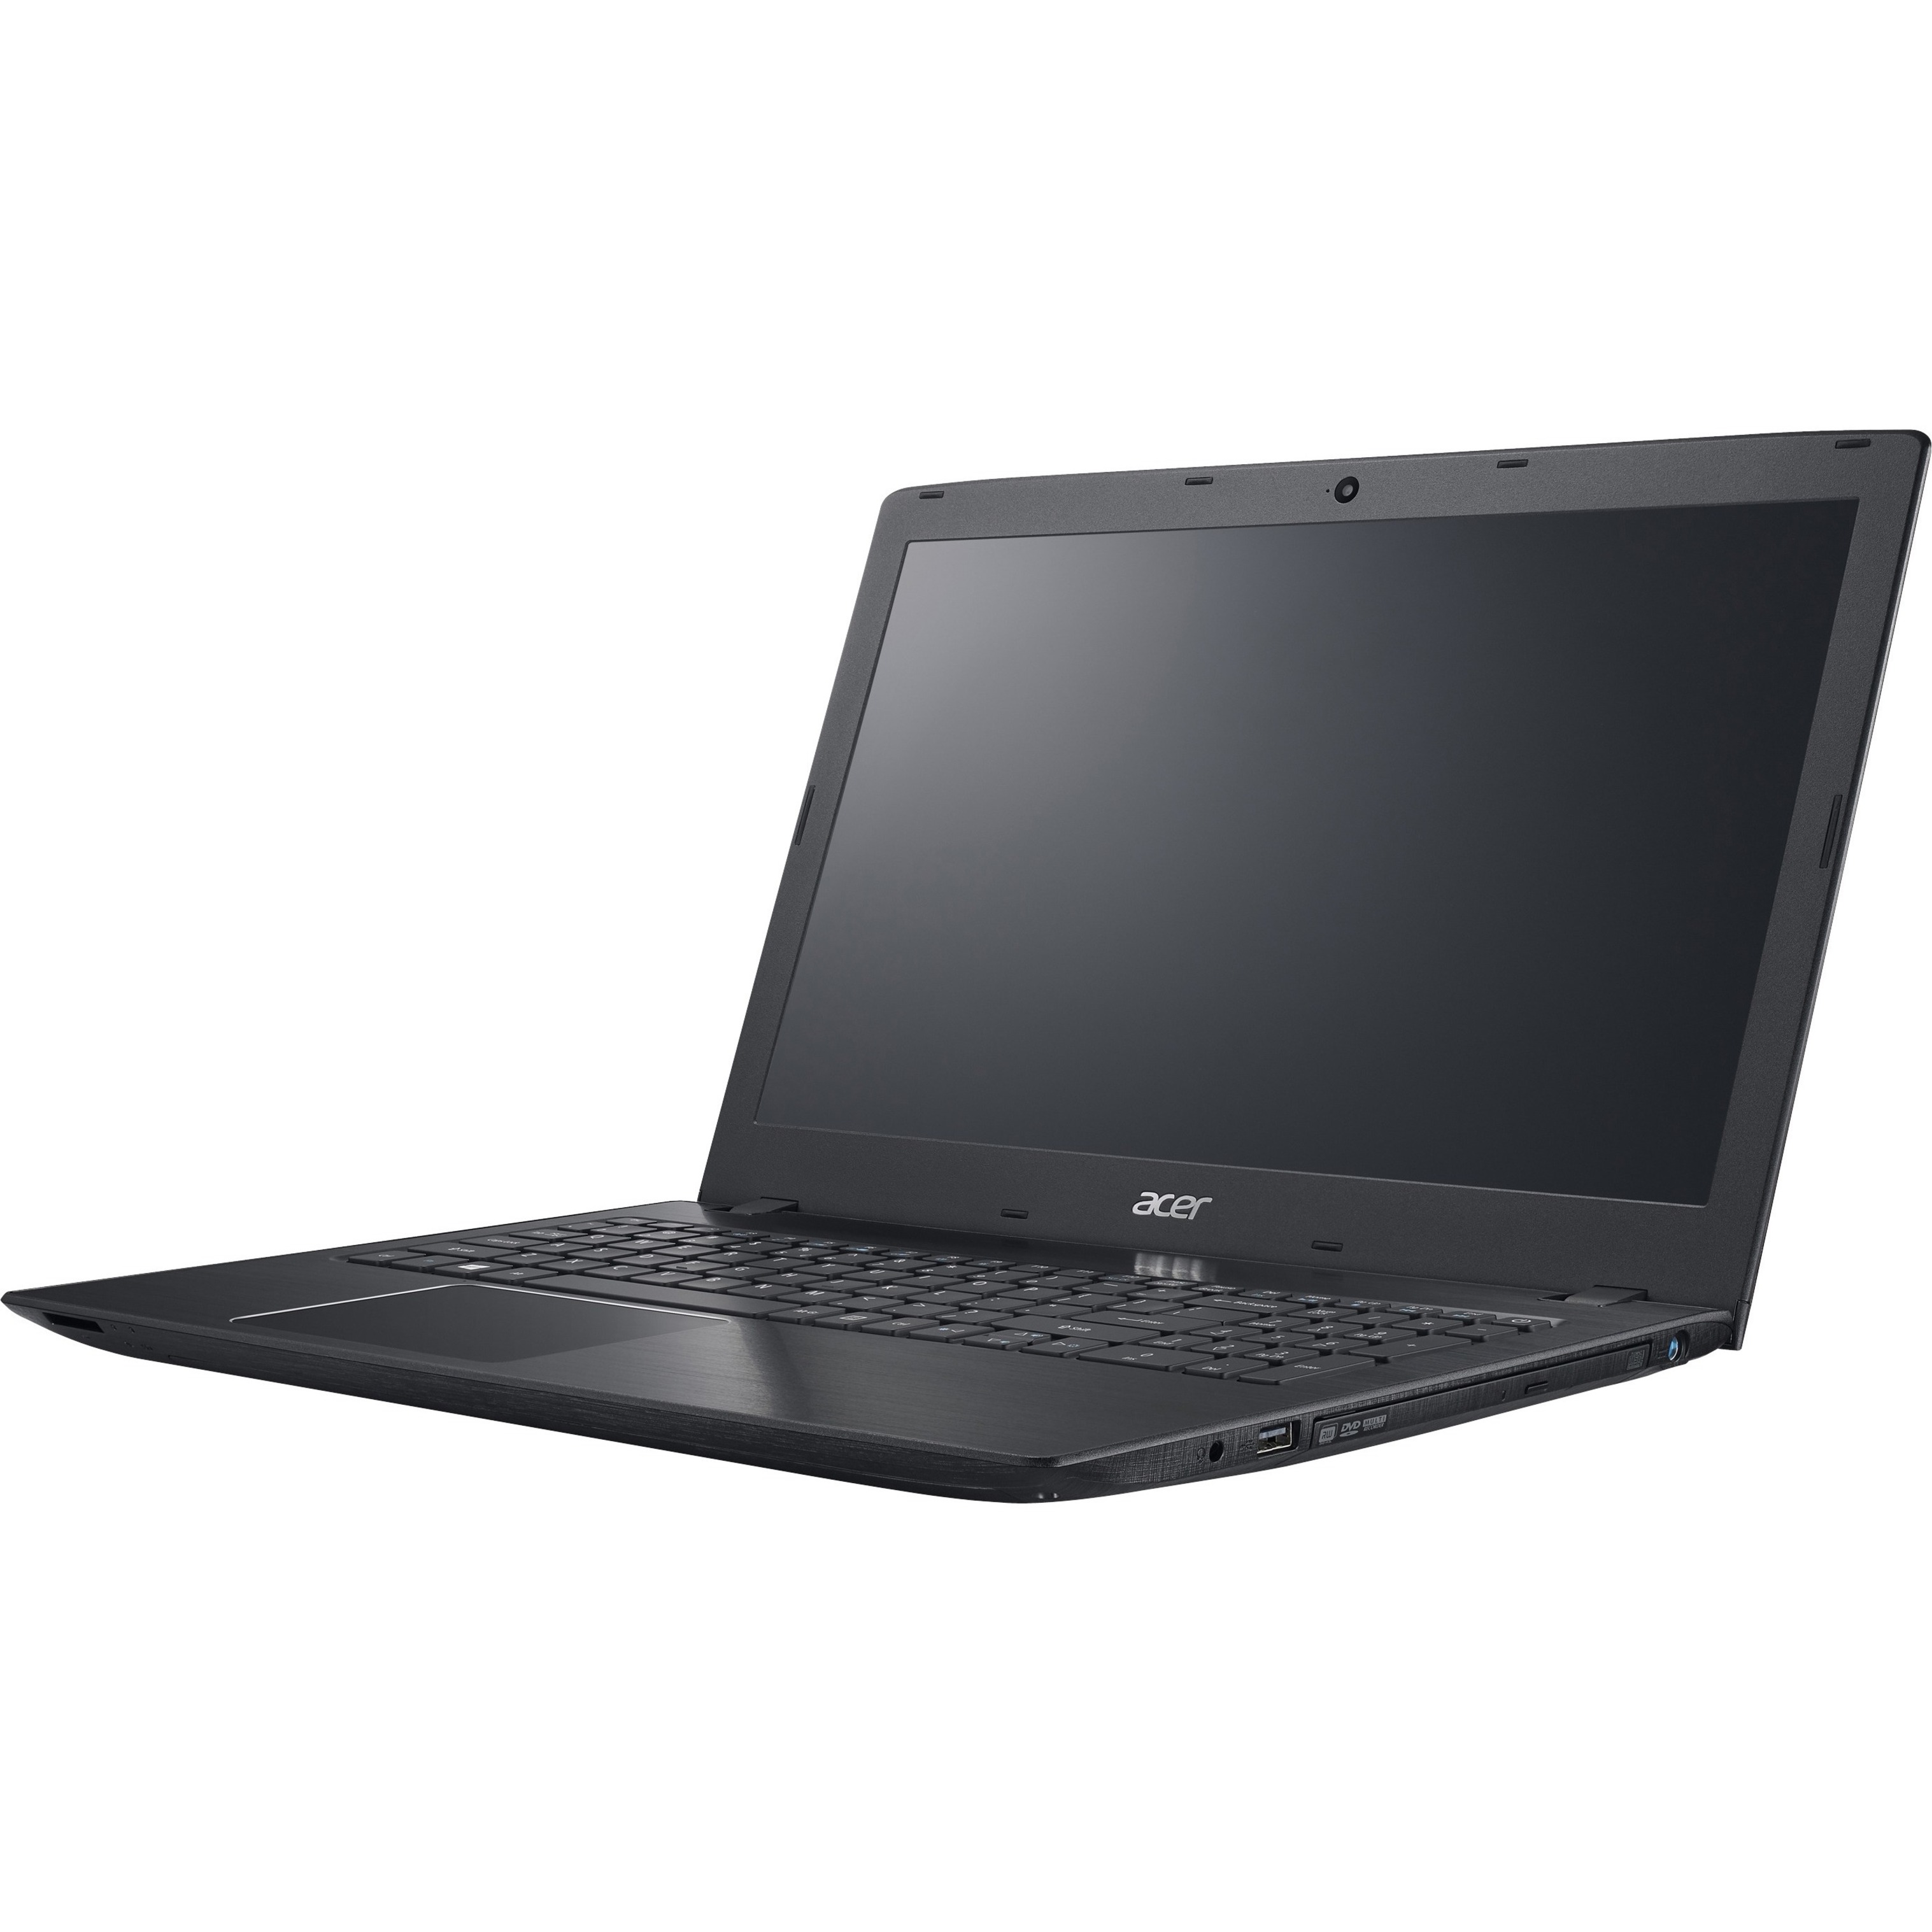 Acer Aspire 15.6" Full HD Laptop, Intel Core i5 i5-7200U, 256GB SSD, DVD Writer, Windows 10 Home, E5-575G-57D4 - image 2 of 6